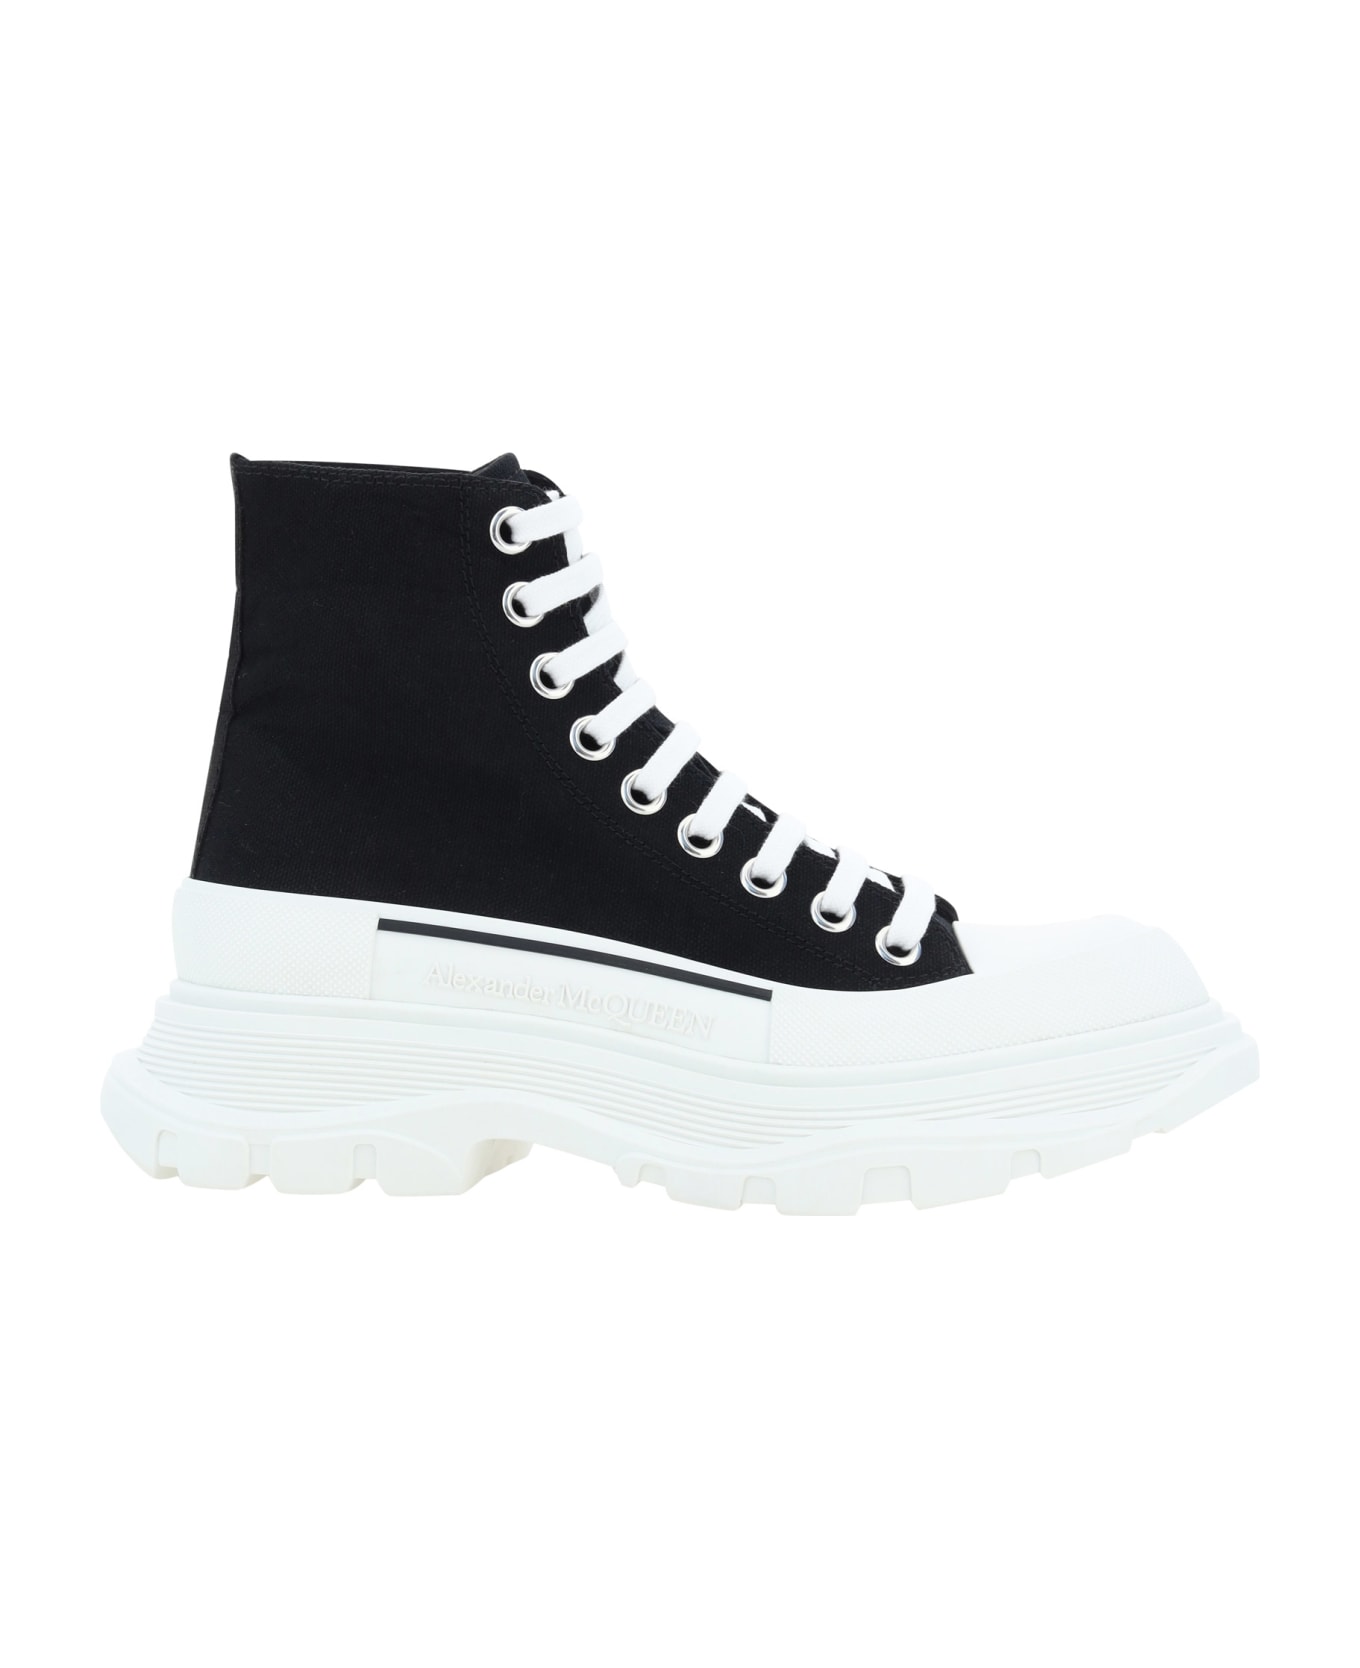 Alexander McQueen Tread Slick Ankle Boots - Black/white